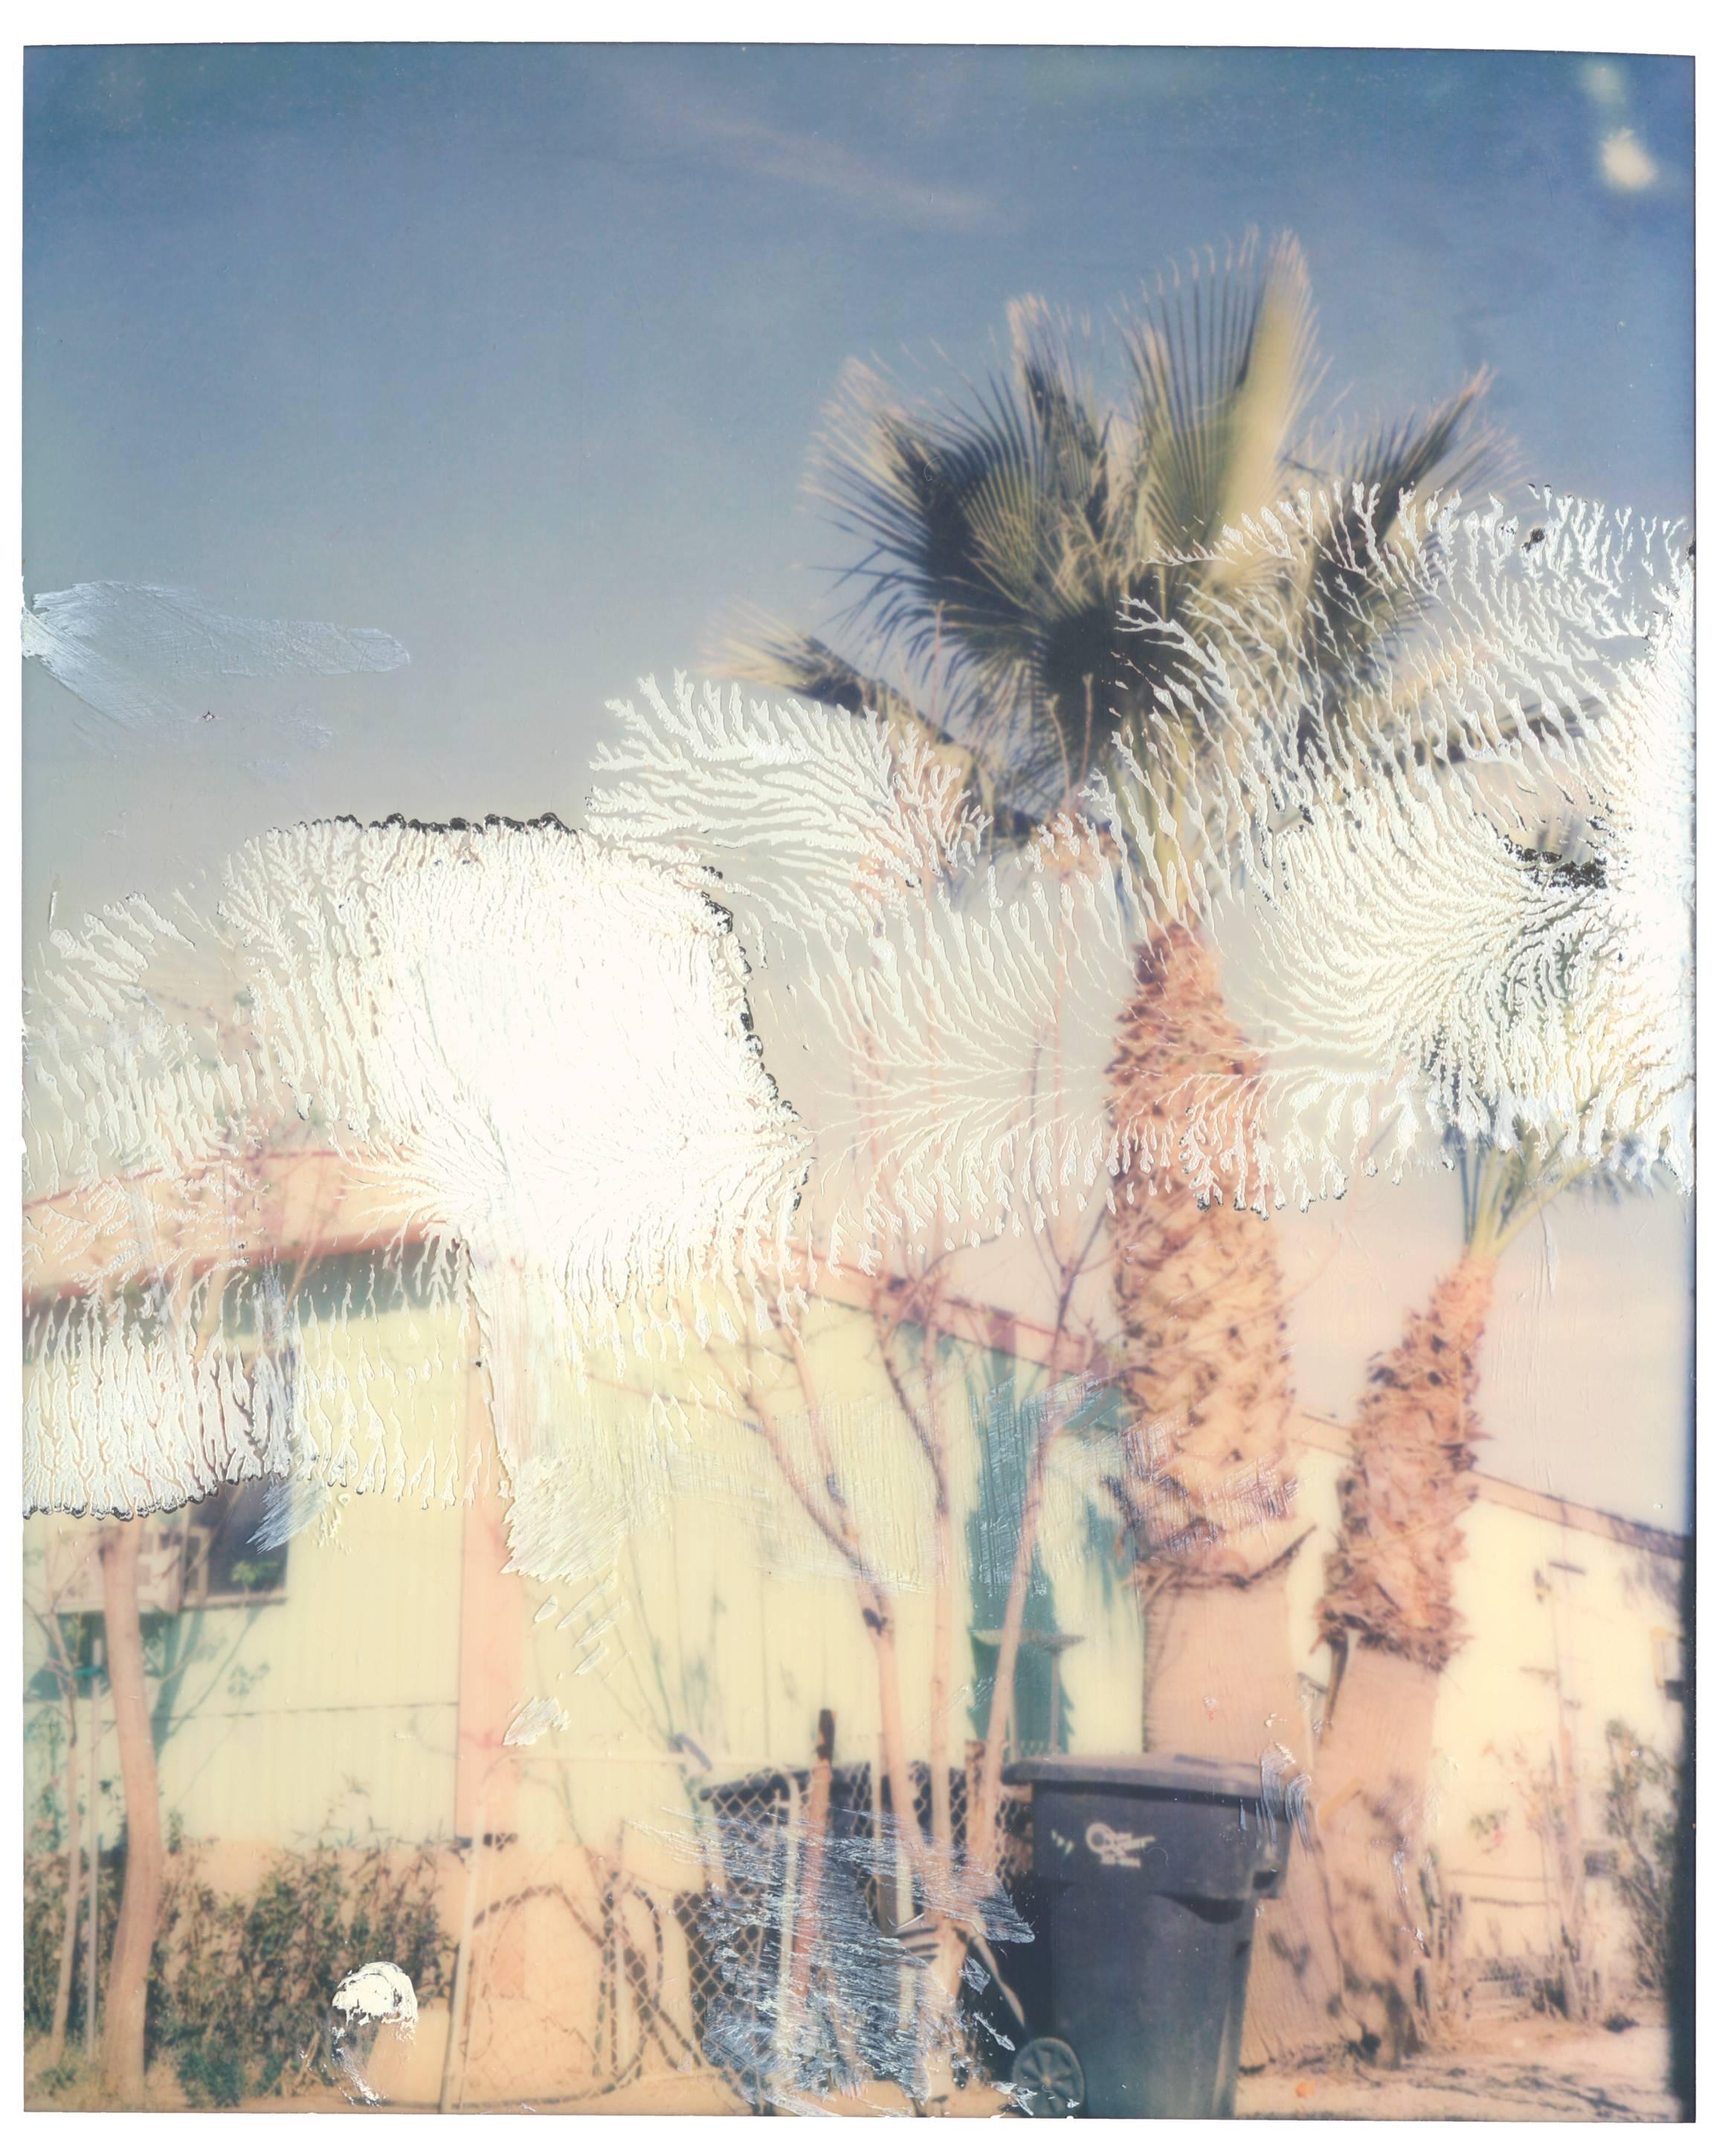 Landscape Photograph Stefanie Schneider - Borrego Springs (Californie Badlands) - Polaroid, XXIe siècle, contemporain